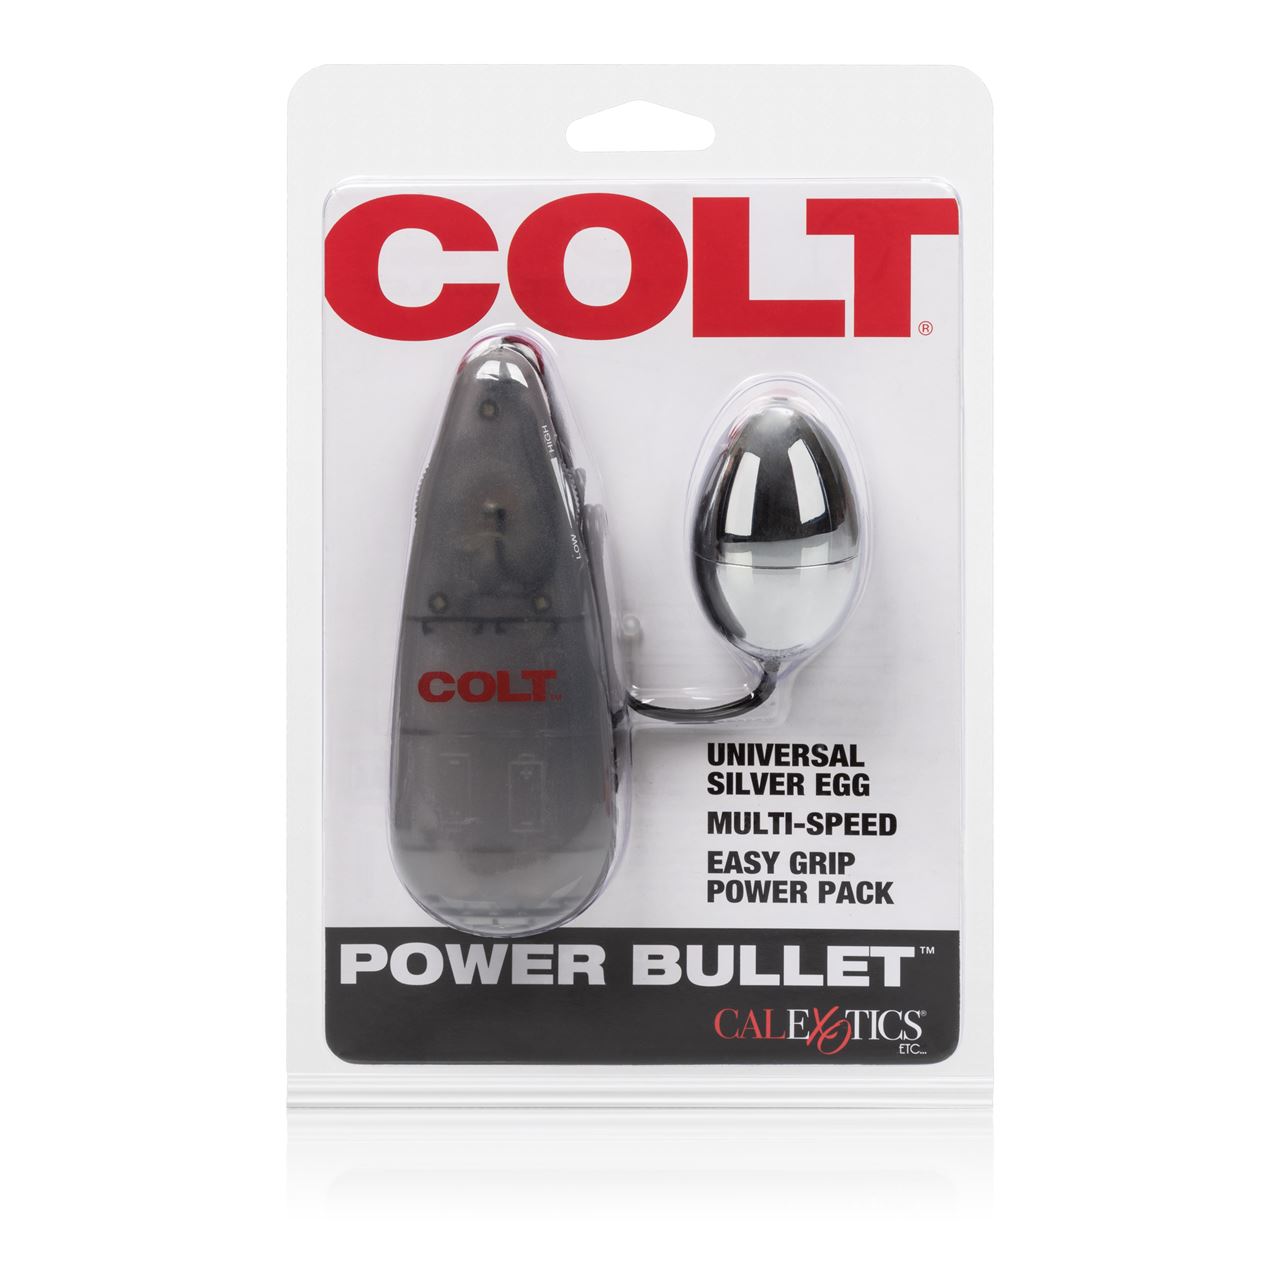 COLT Multi-Speed Power Pak Egg - Silver - UABDSM